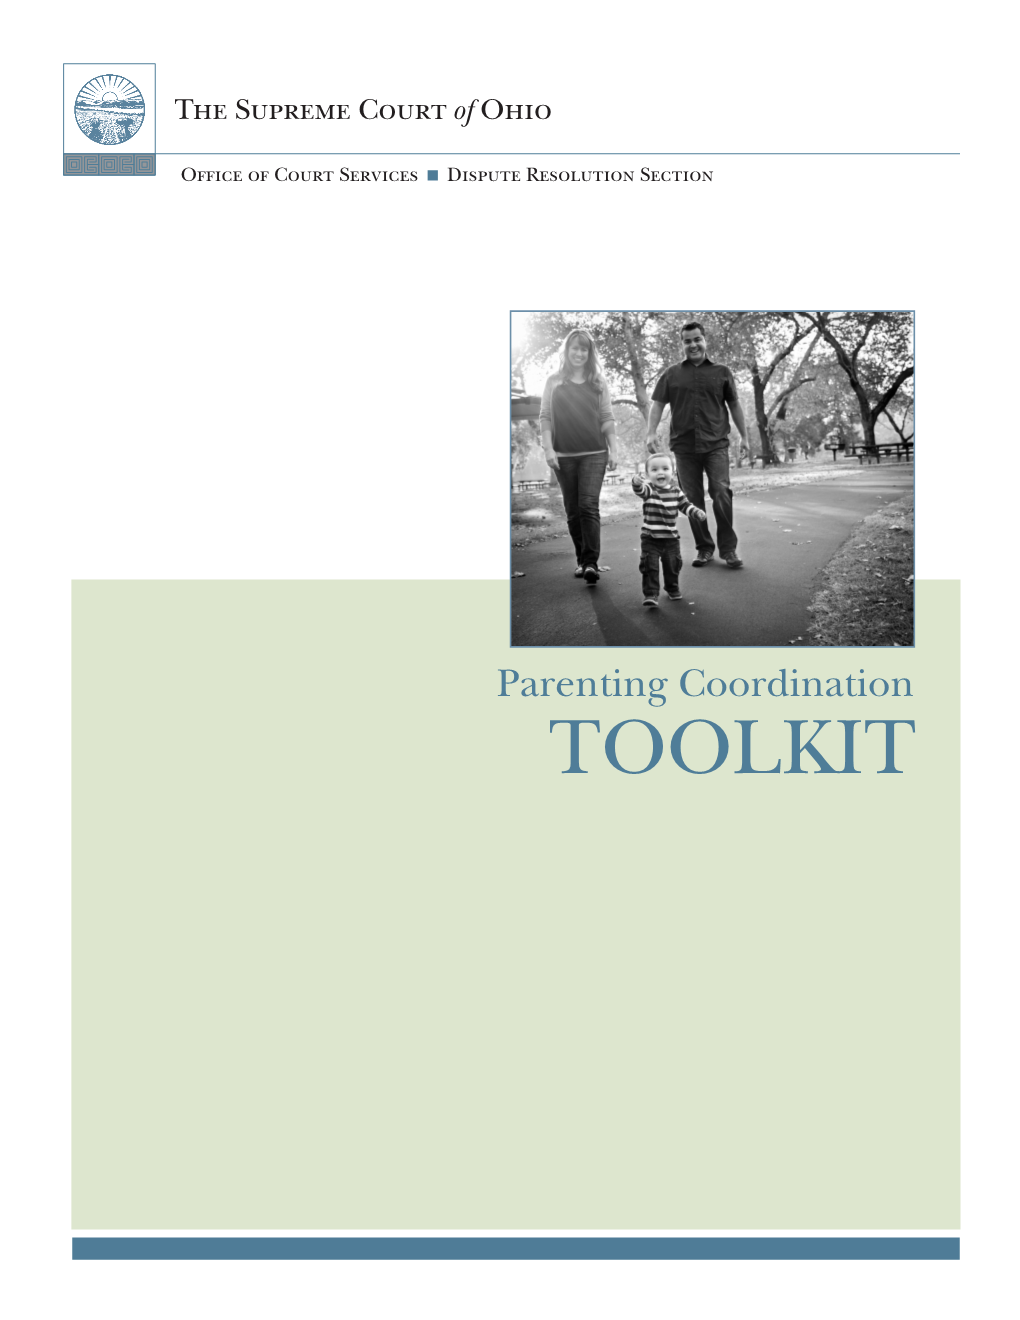 Supreme Court of Ohio Parenting Coordination Toolkit